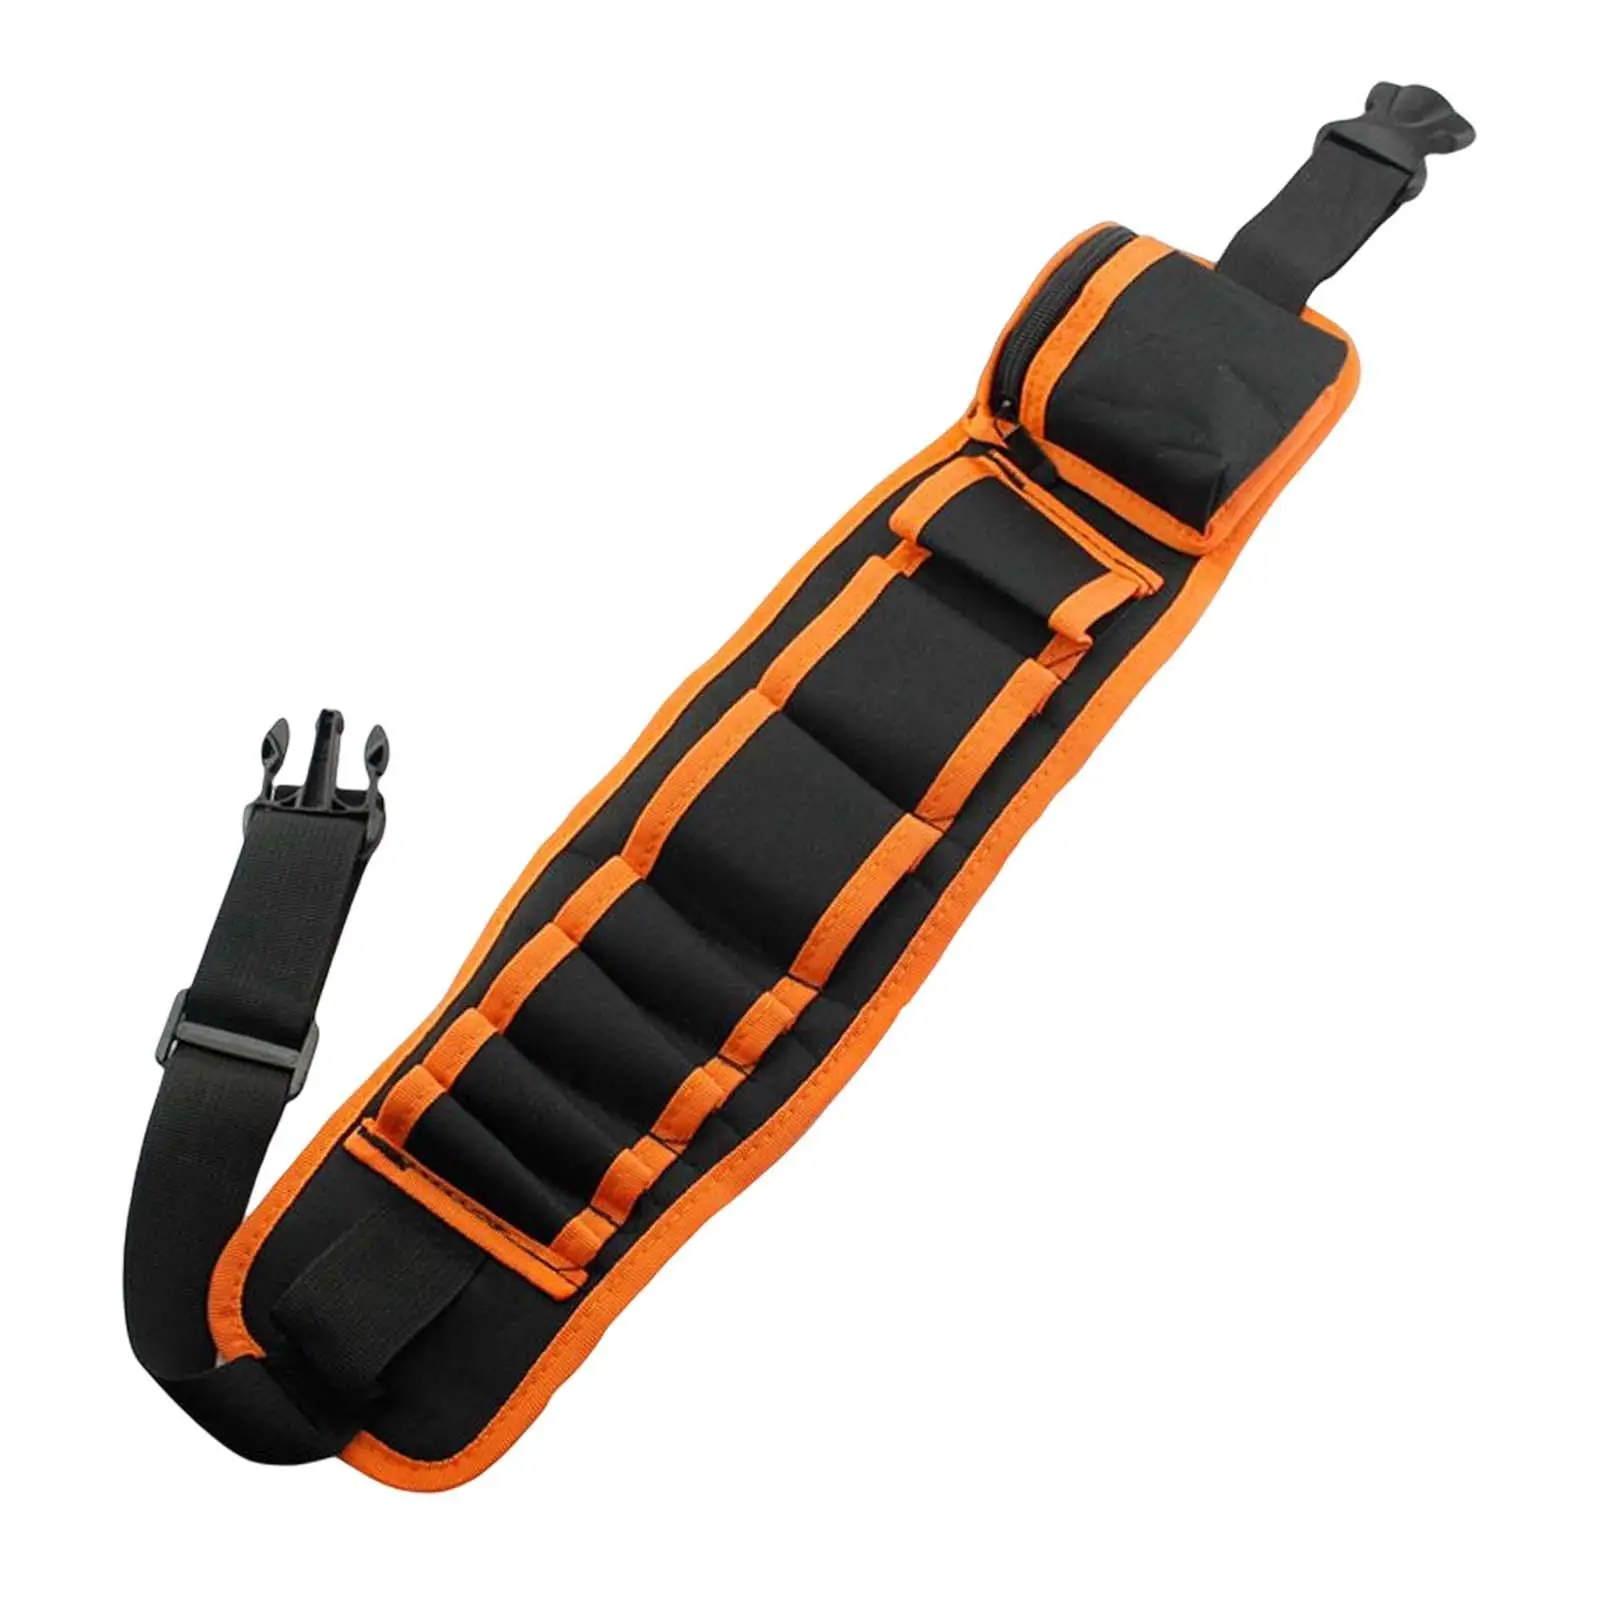 Portable Tool Belt Bag with Adjustable Belt Electrician Storage Belt Bag Gardening Tool Waist Bag for Electrician Workers